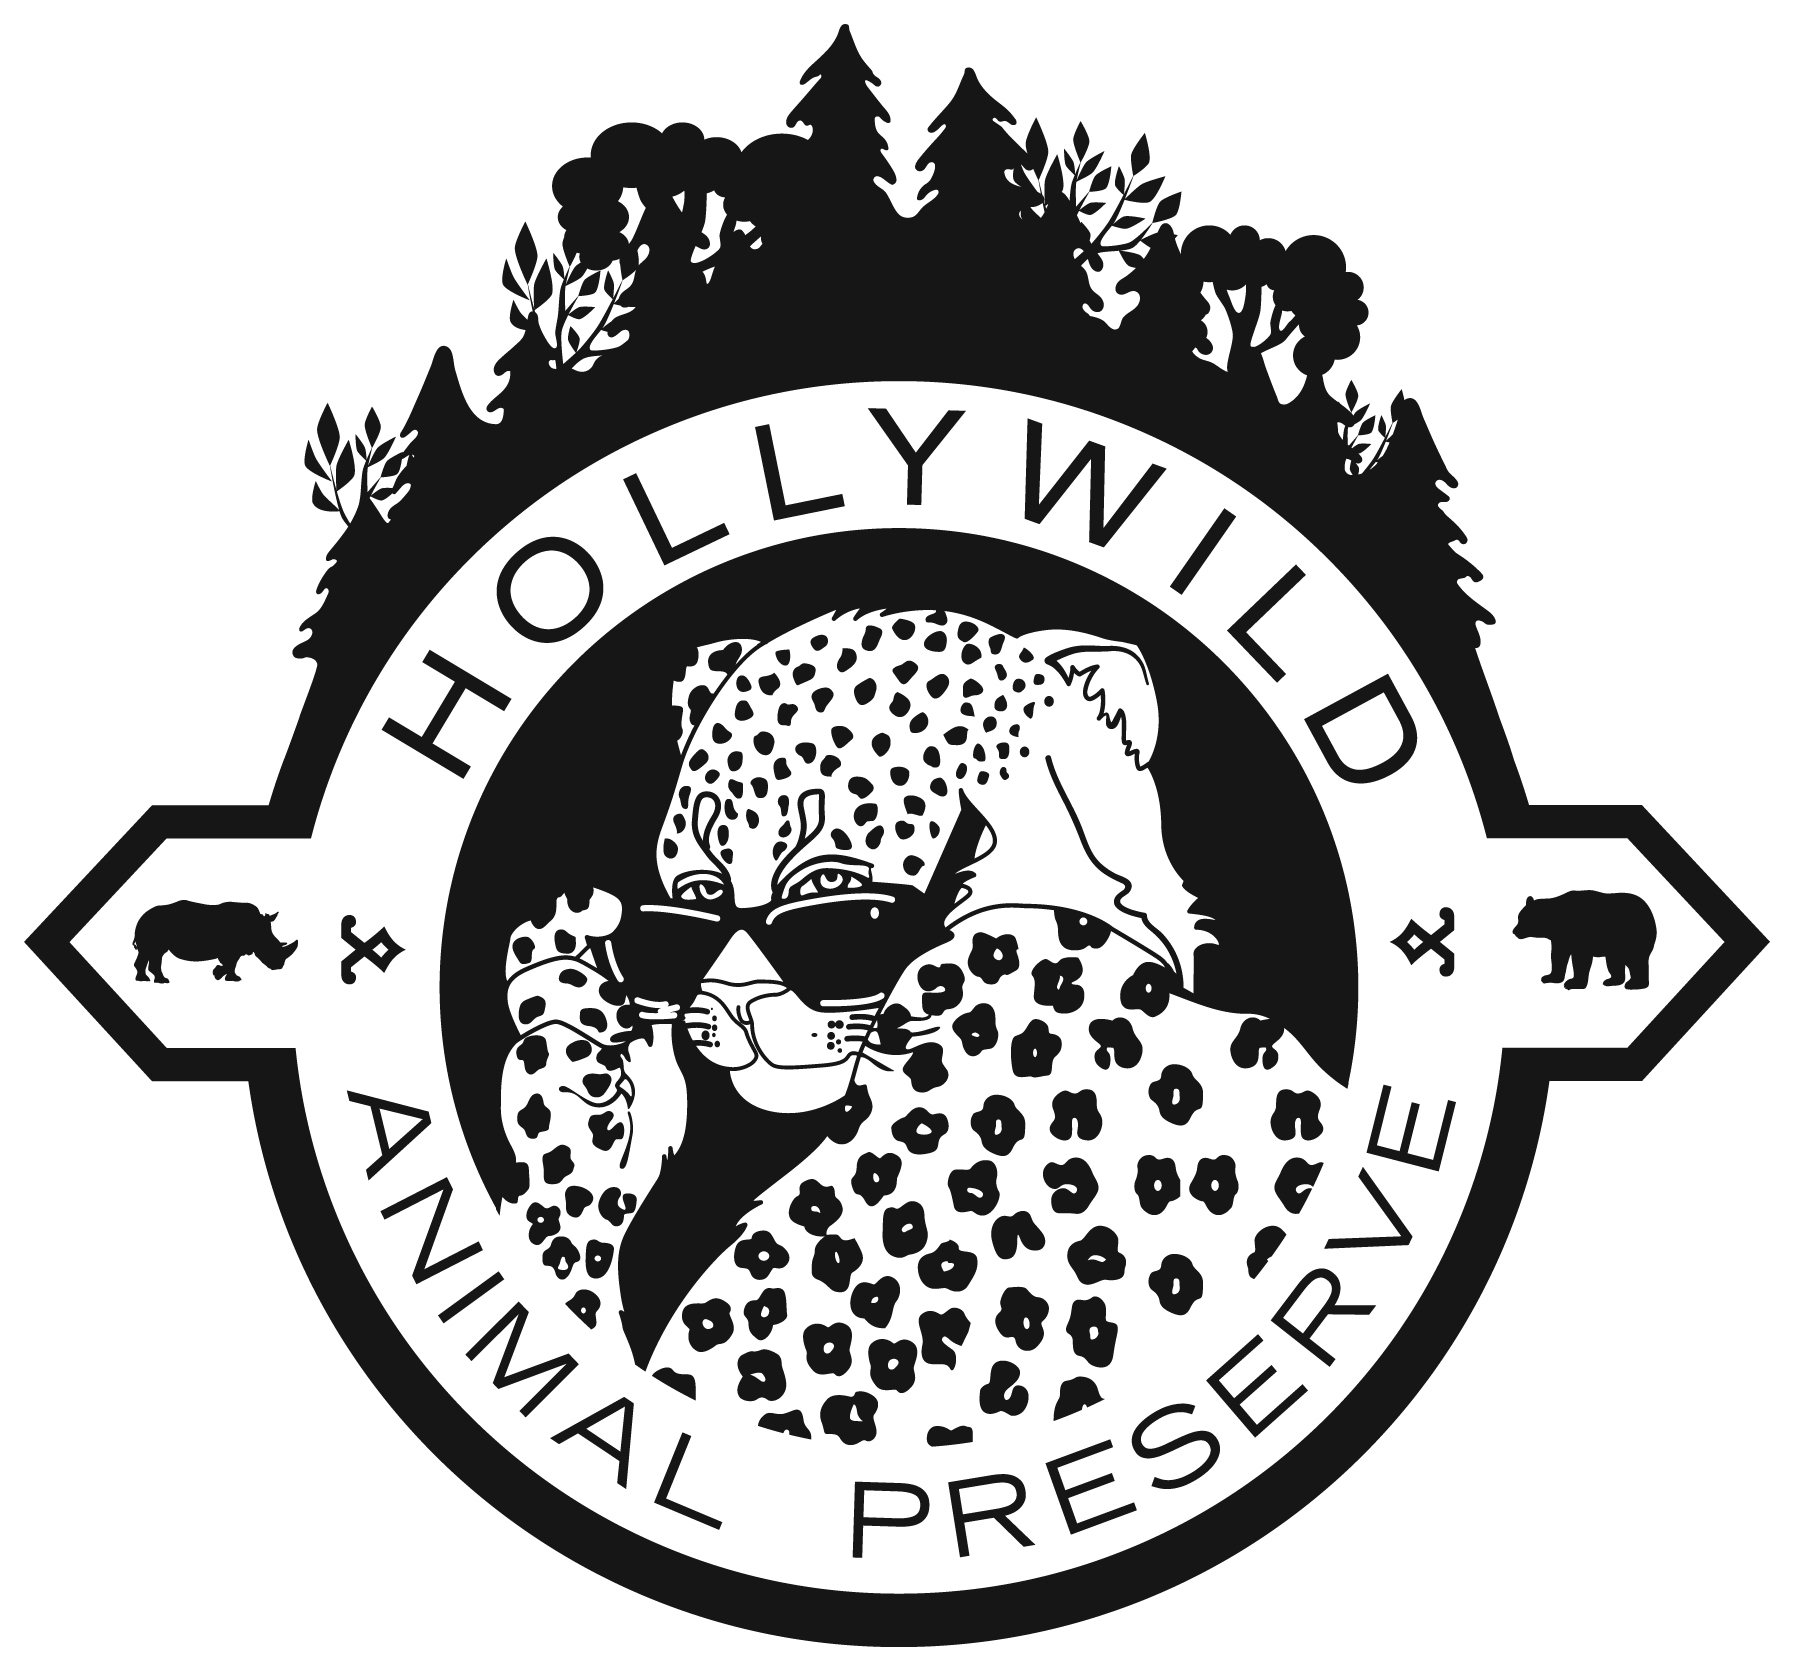 Hollywild Animal Preserve logo